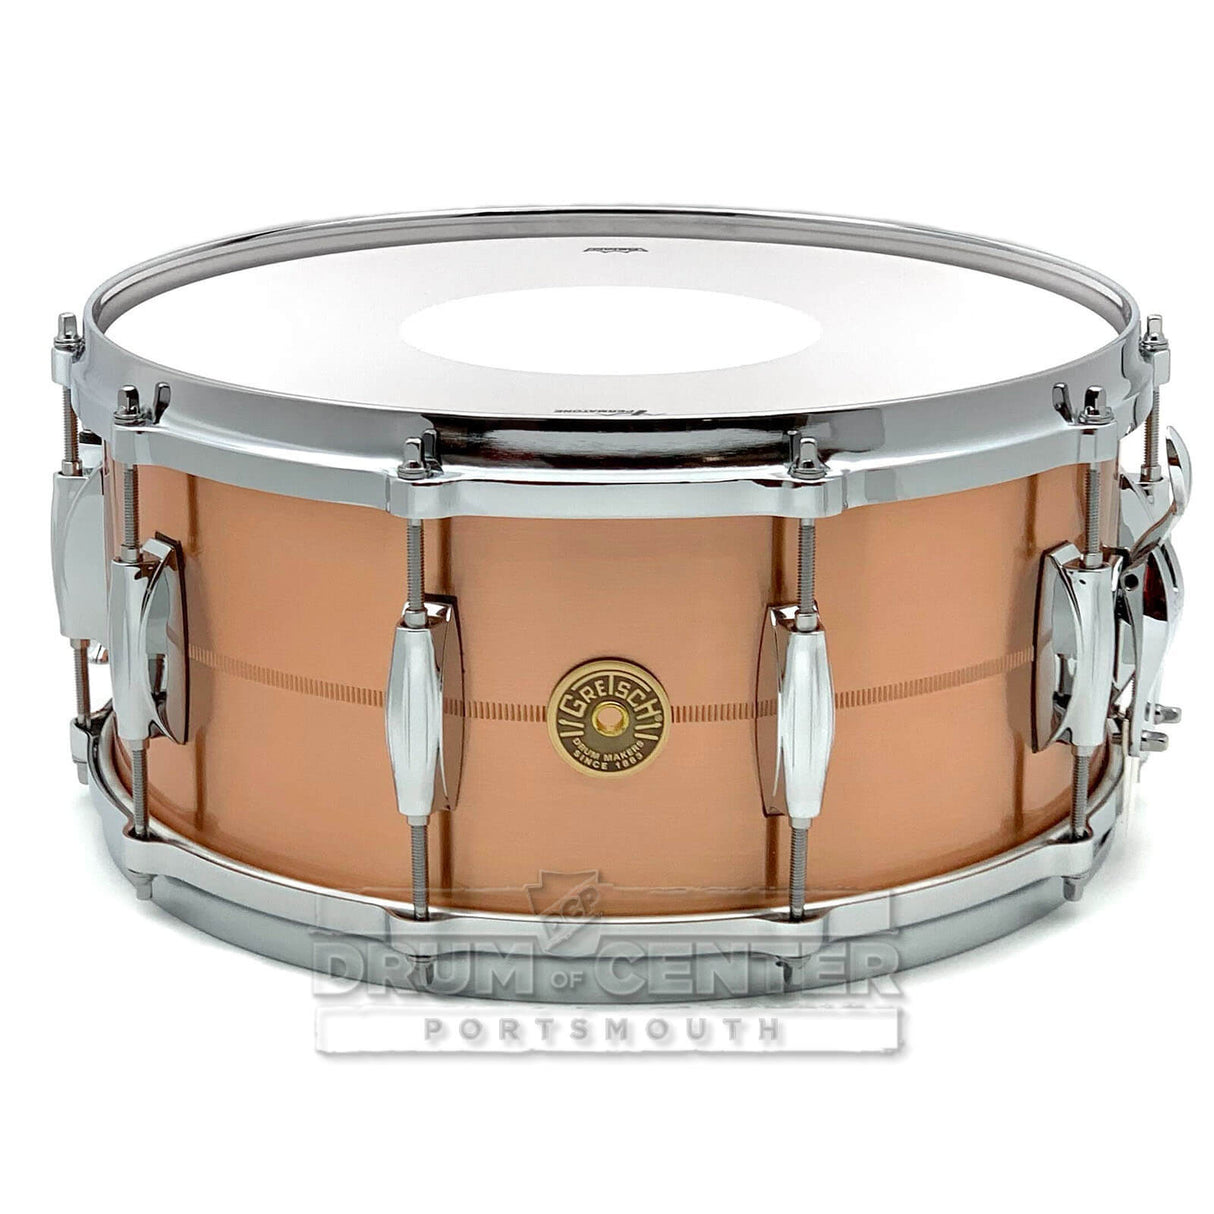 Gretsch USA Custom 2mm Copper Snare Drum 14x6.5